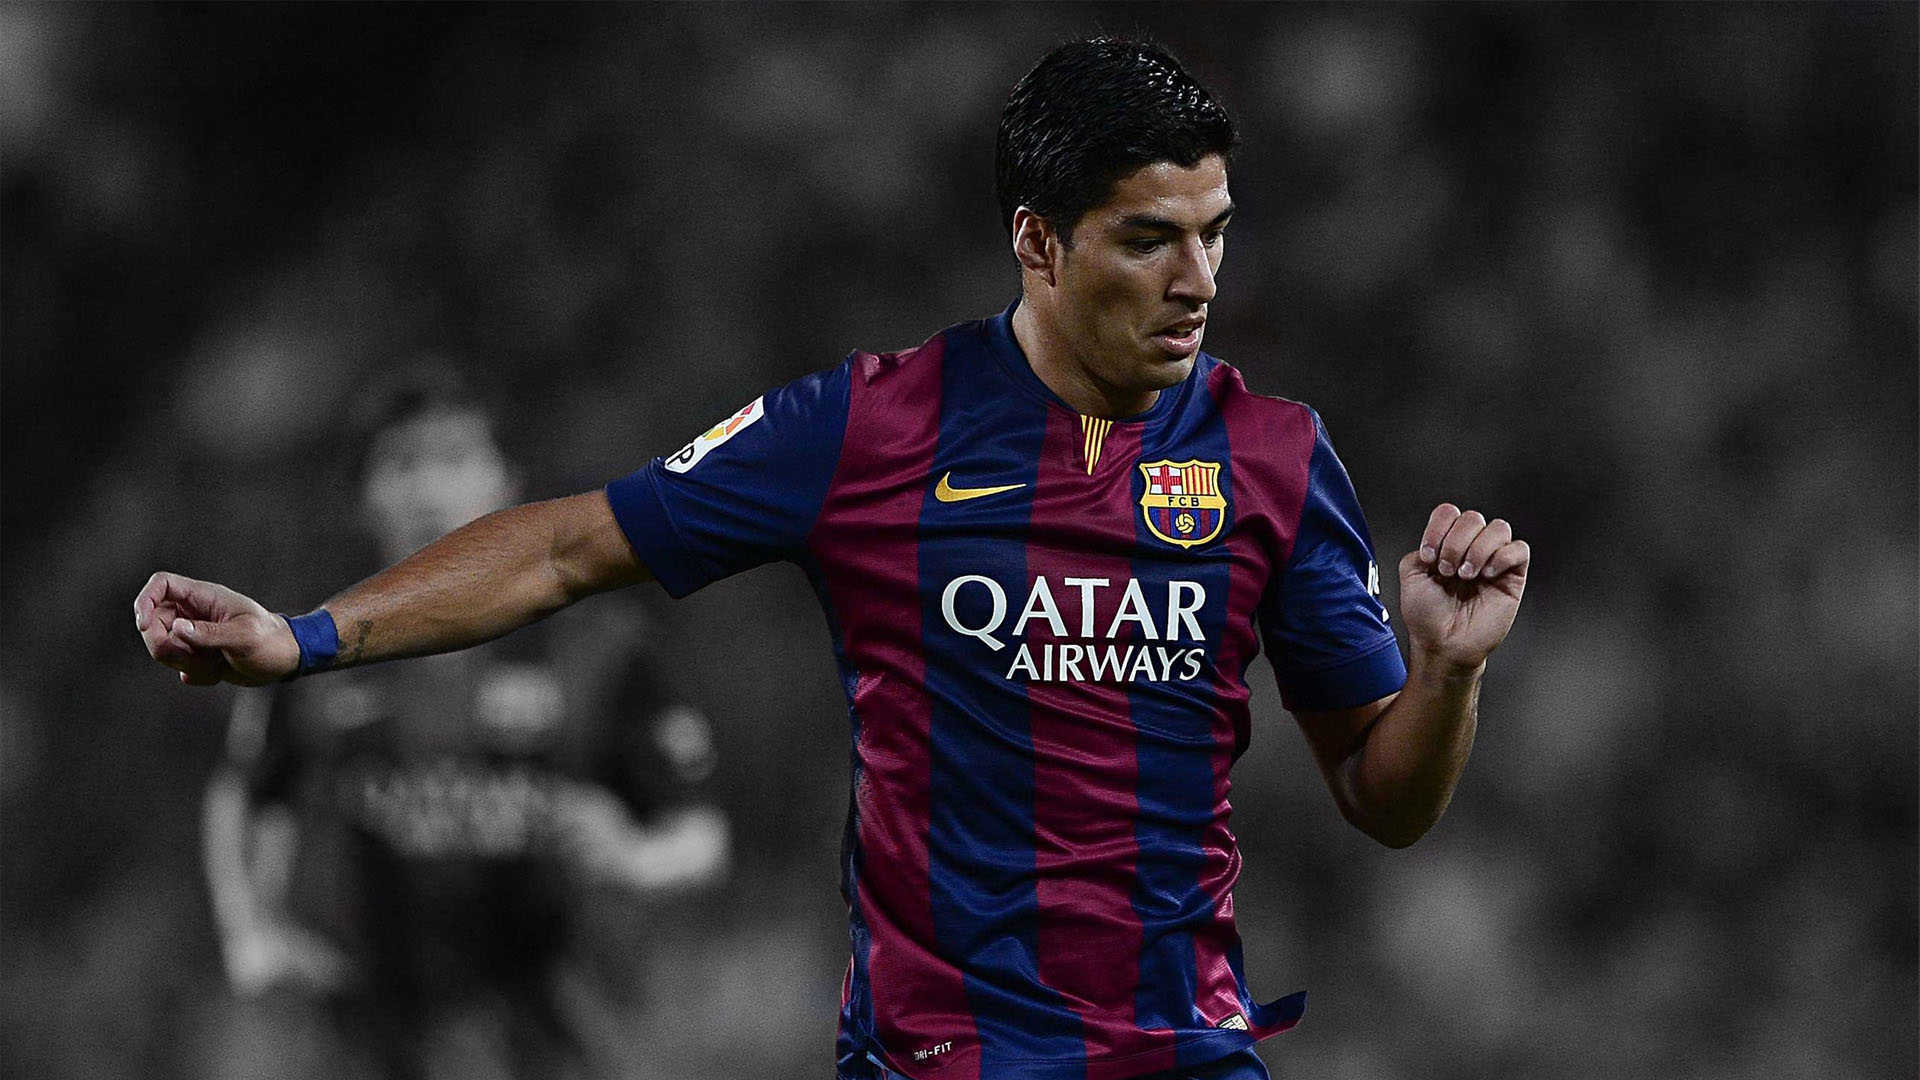 Hd Luis Suarez Football Soccer Player Free Background Mobile Desktop Download Images